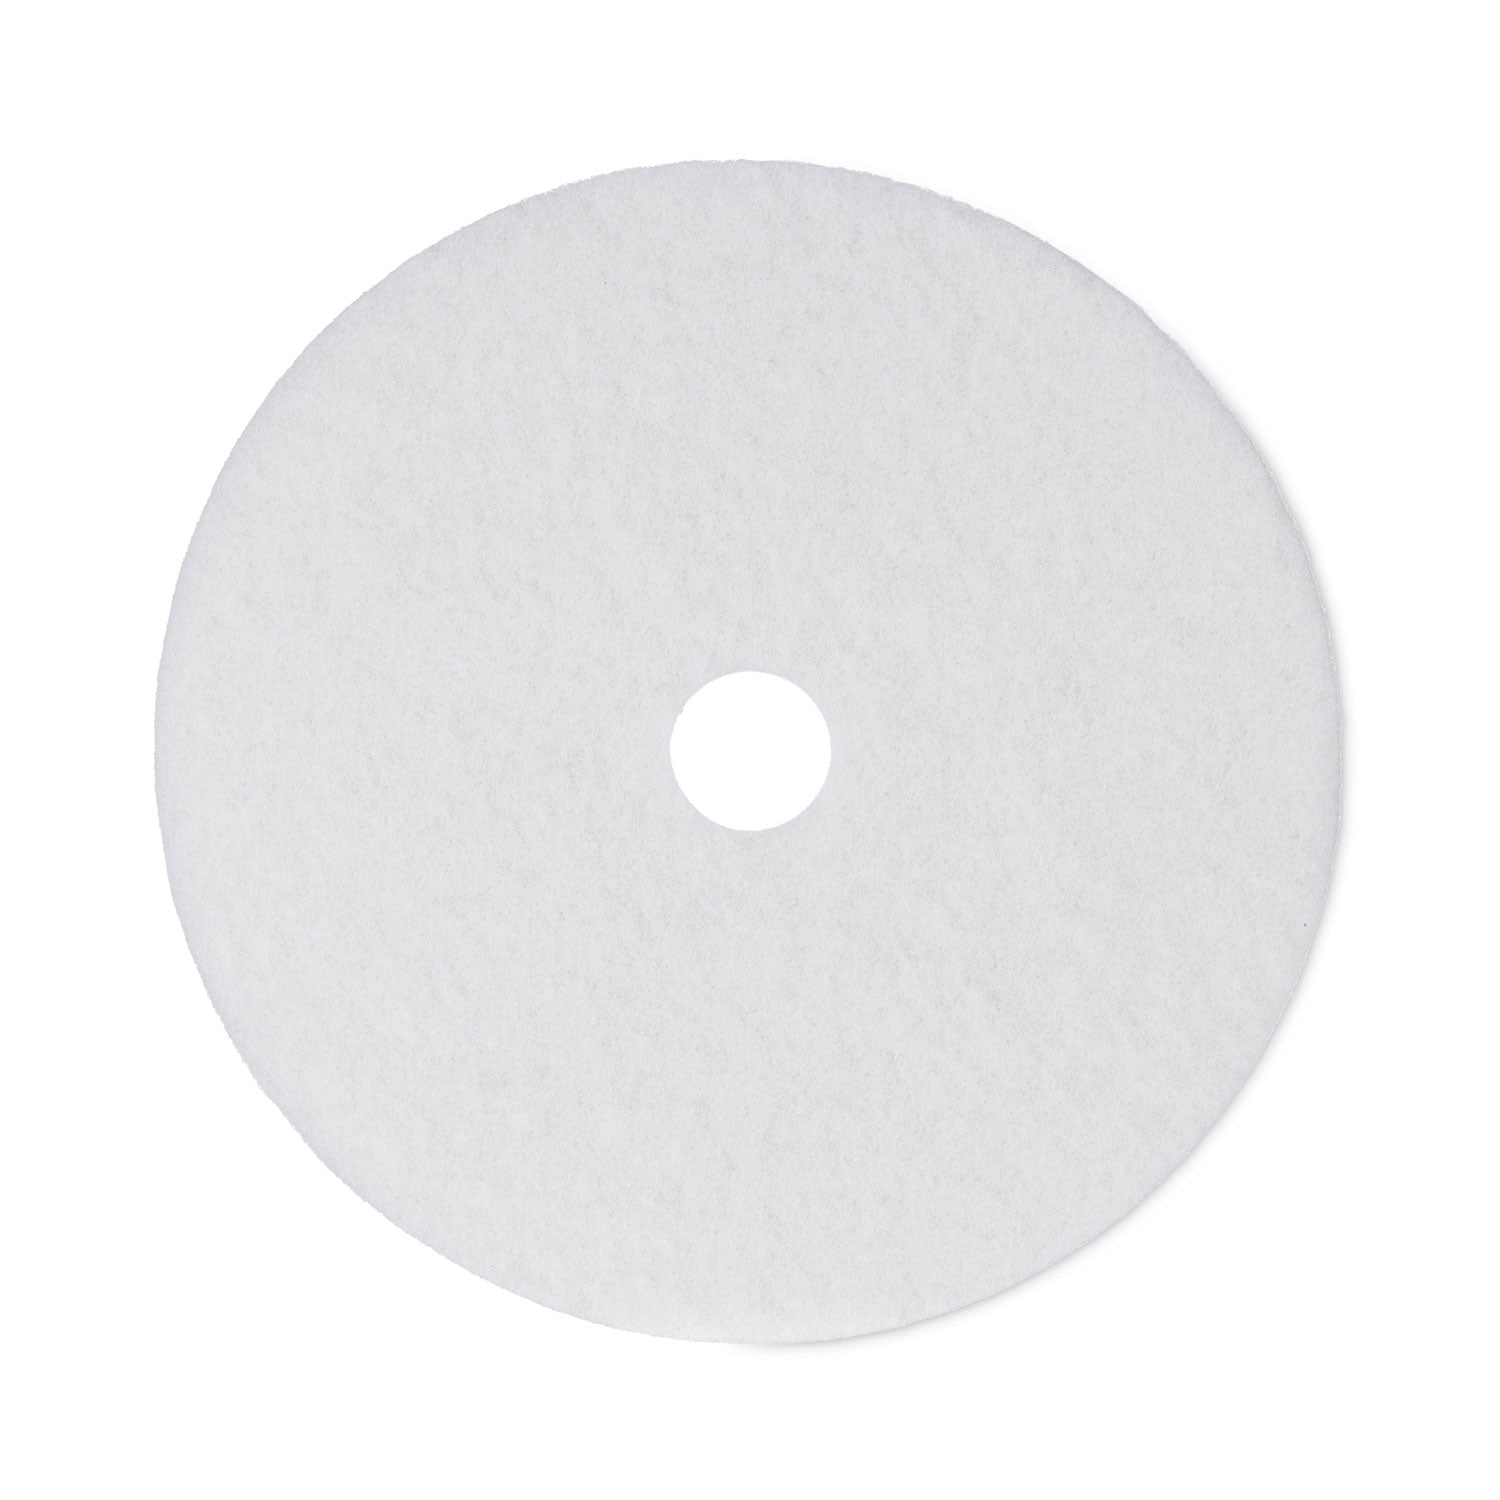 polishing-floor-pads-21-diameter-white-5-carton_bwk4021whi - 1